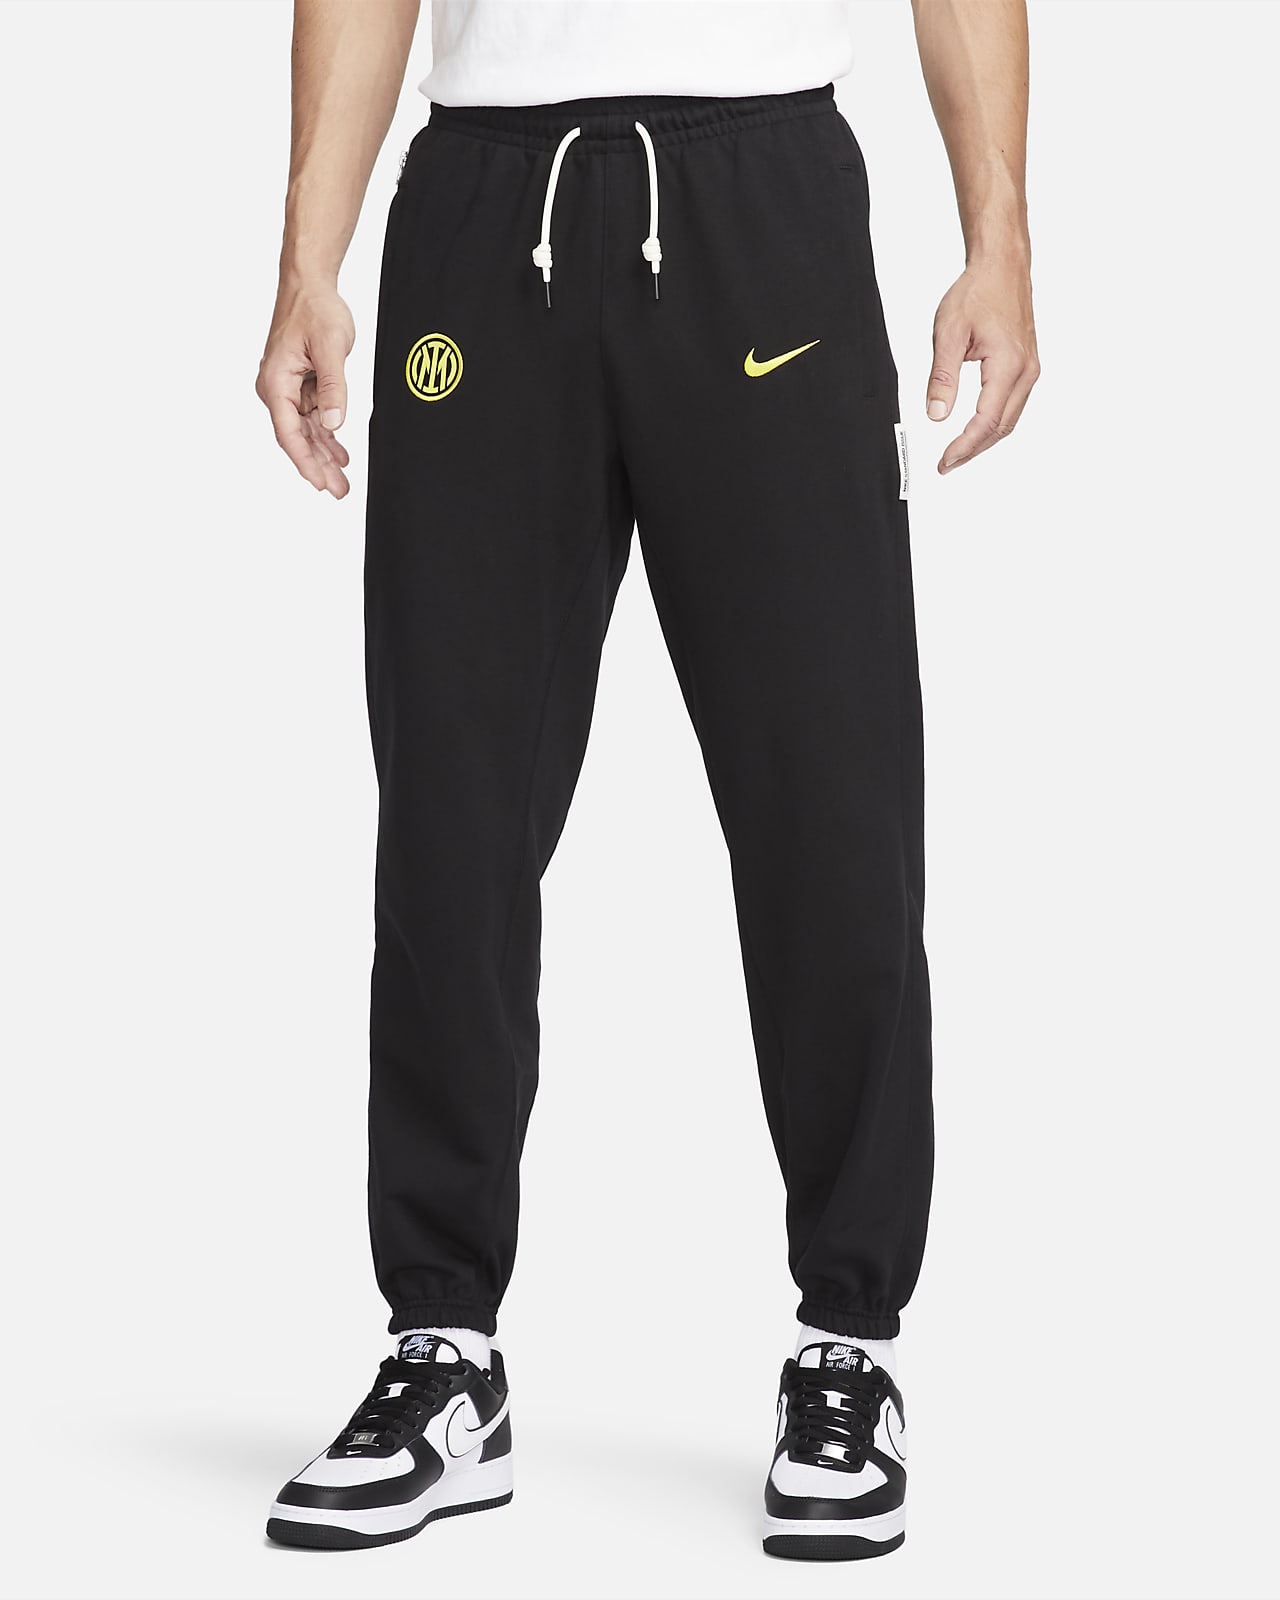 Inter de Milà Standard Issue Pantalons de futbol Nike - Home